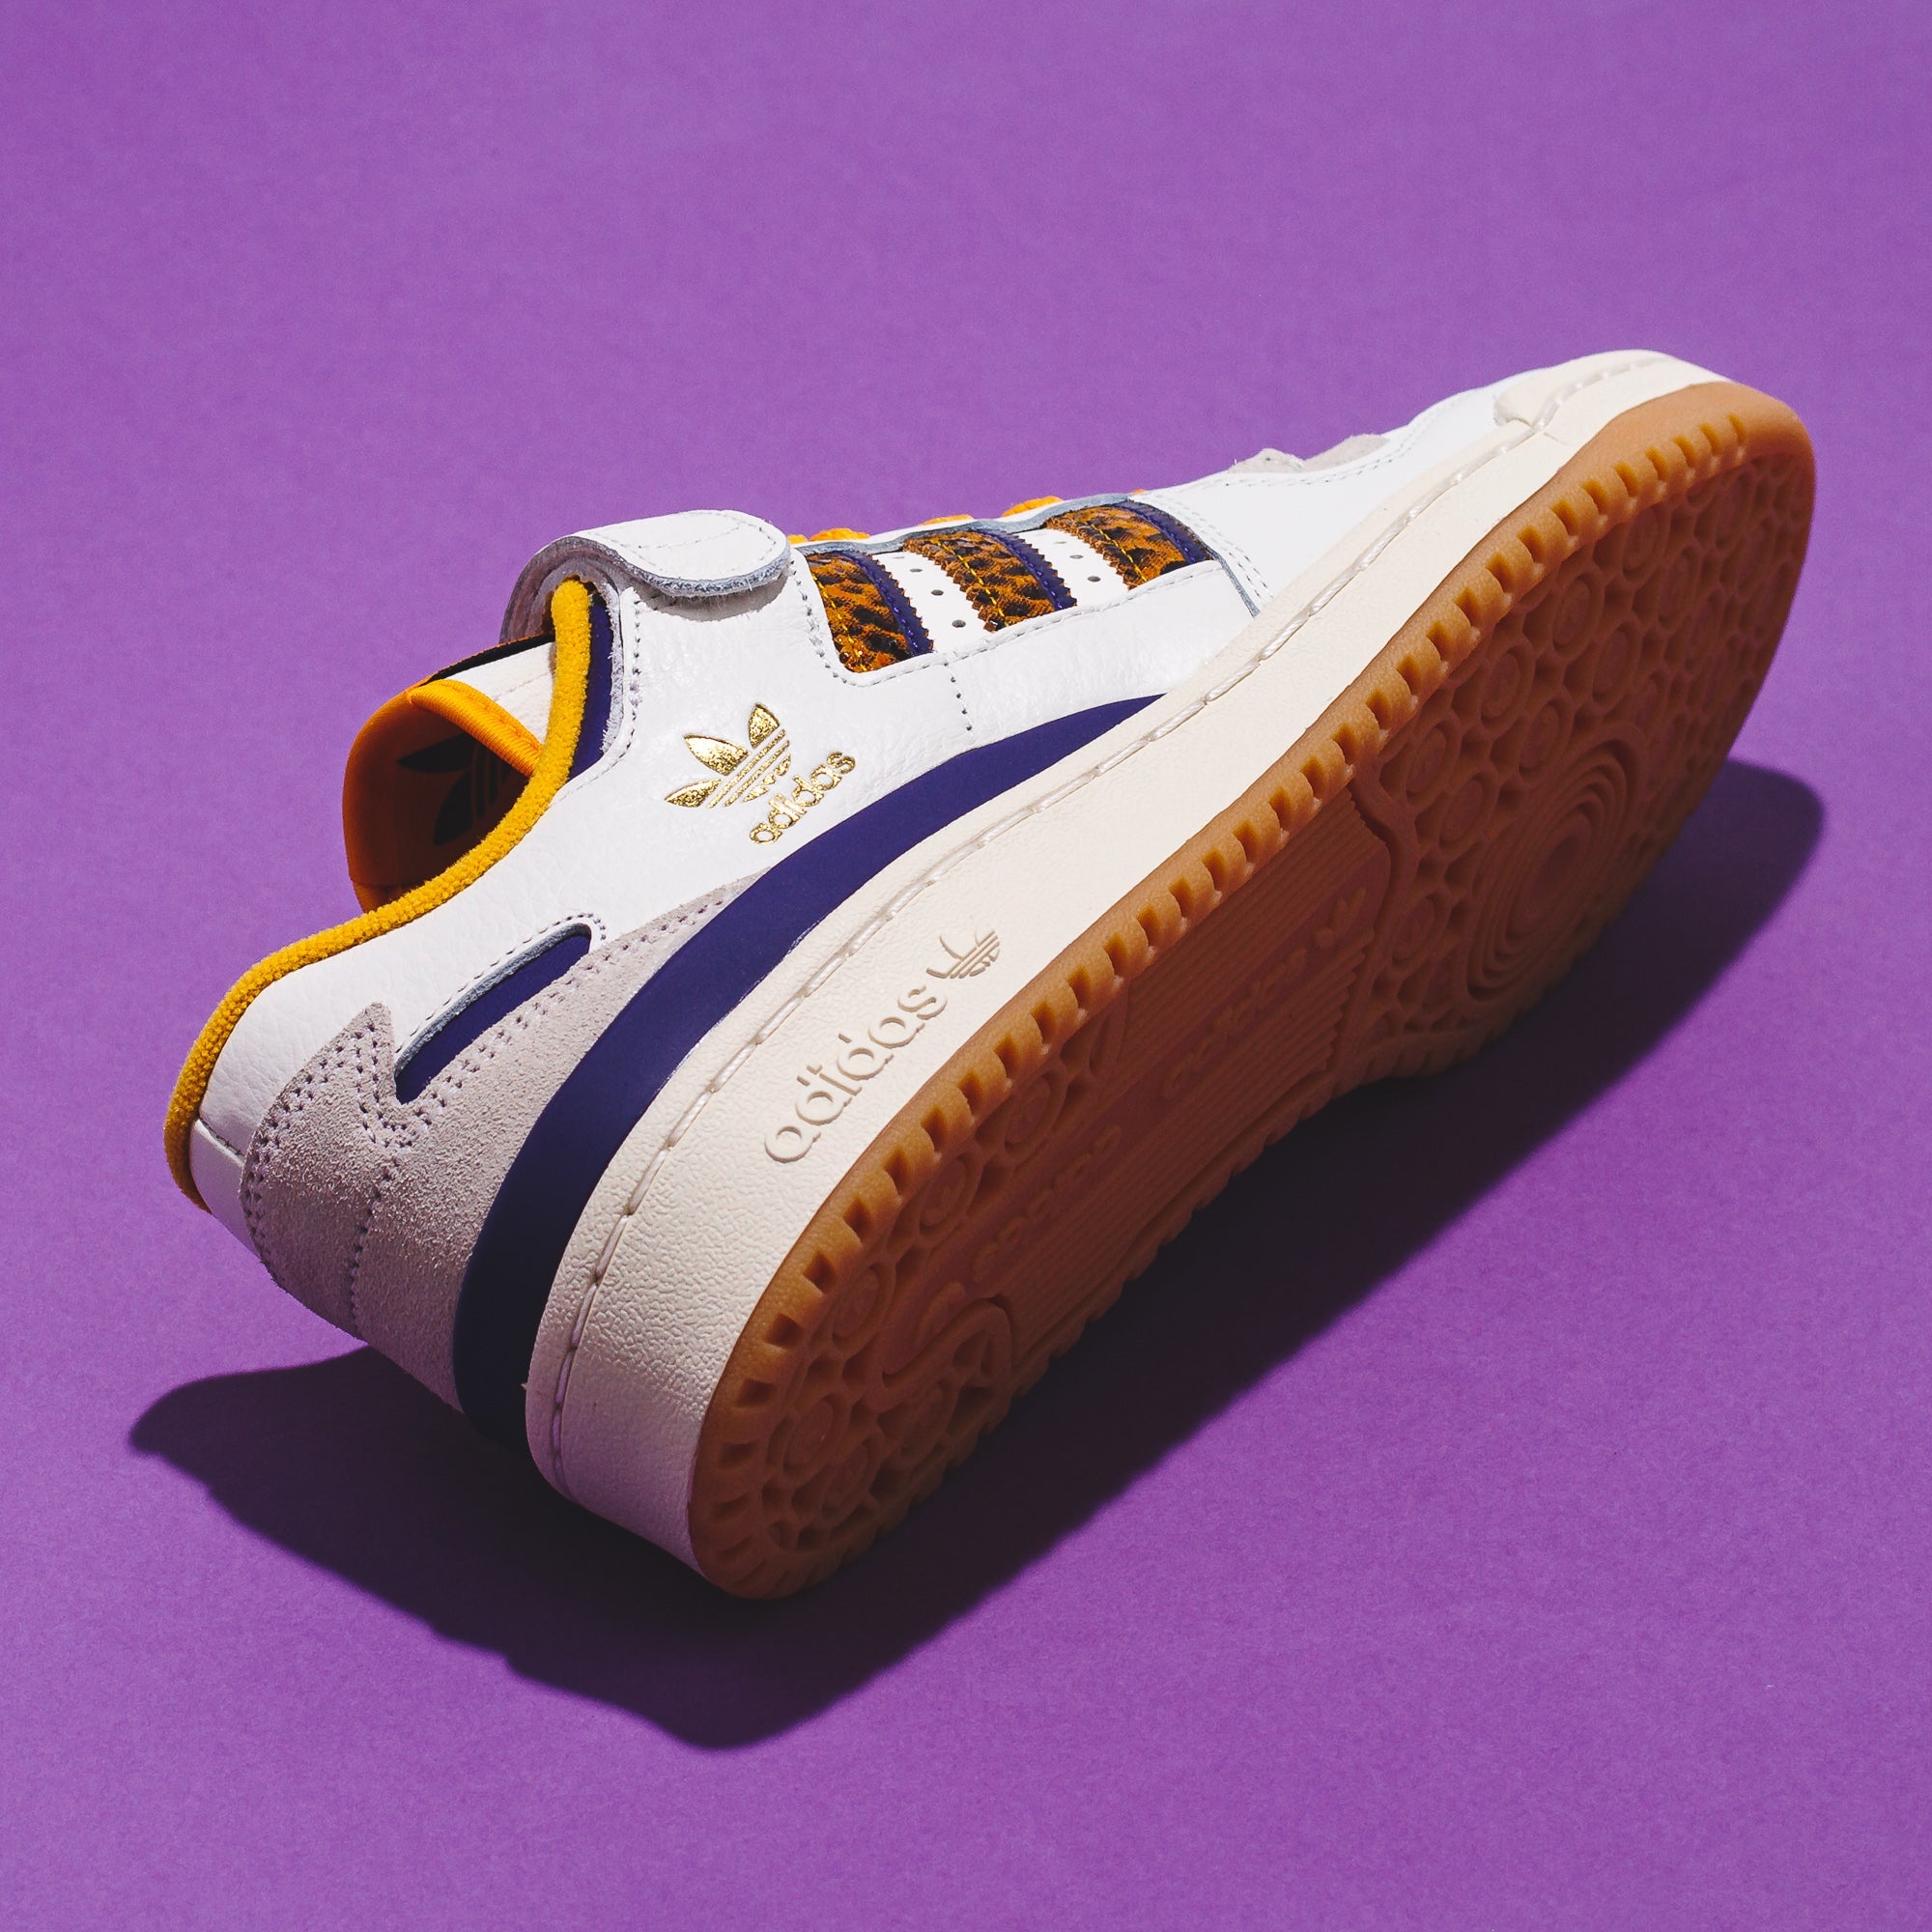 Adidas Originals Off-White & Burgundy Forum 84 Sneakers